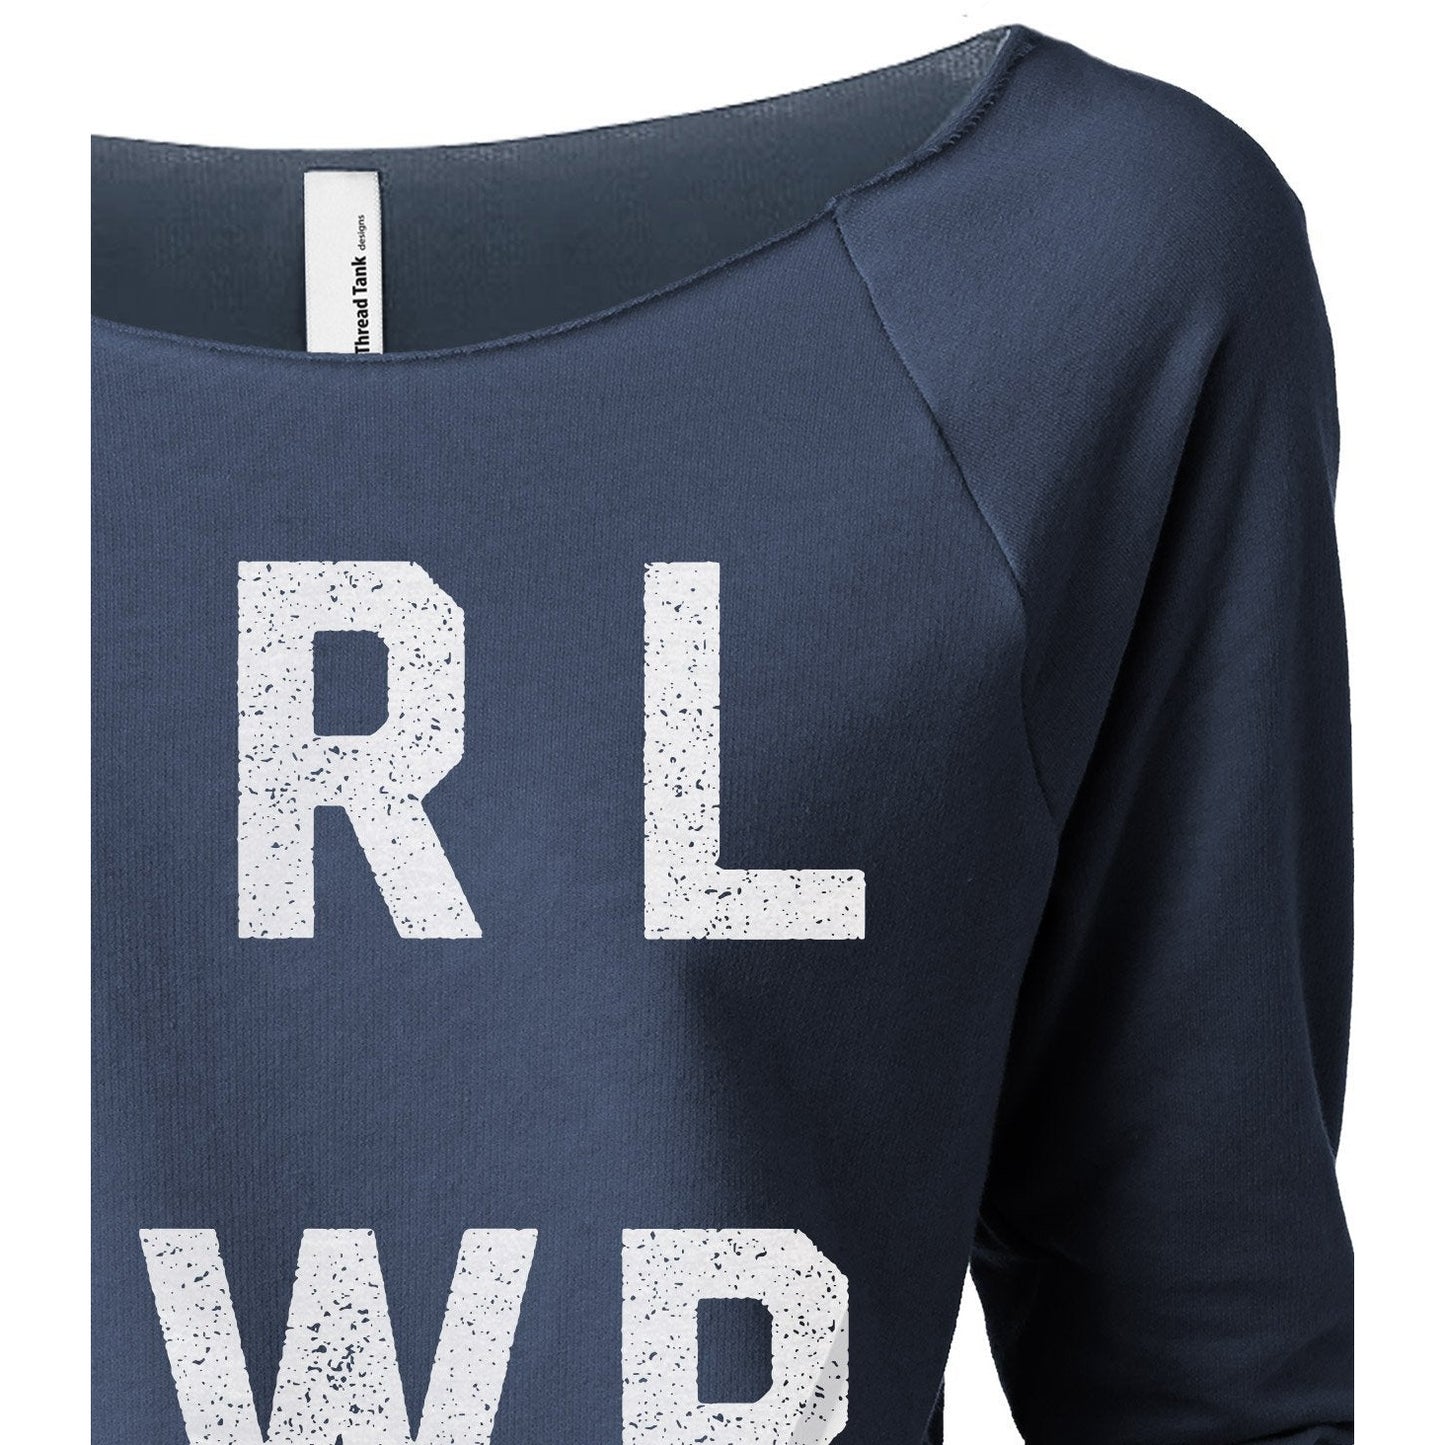 GRL PWR Girl Power Women's Graphic Printed Lightweight Slouchy 3/4 Sleeves Sweatshirt Navy Closeup